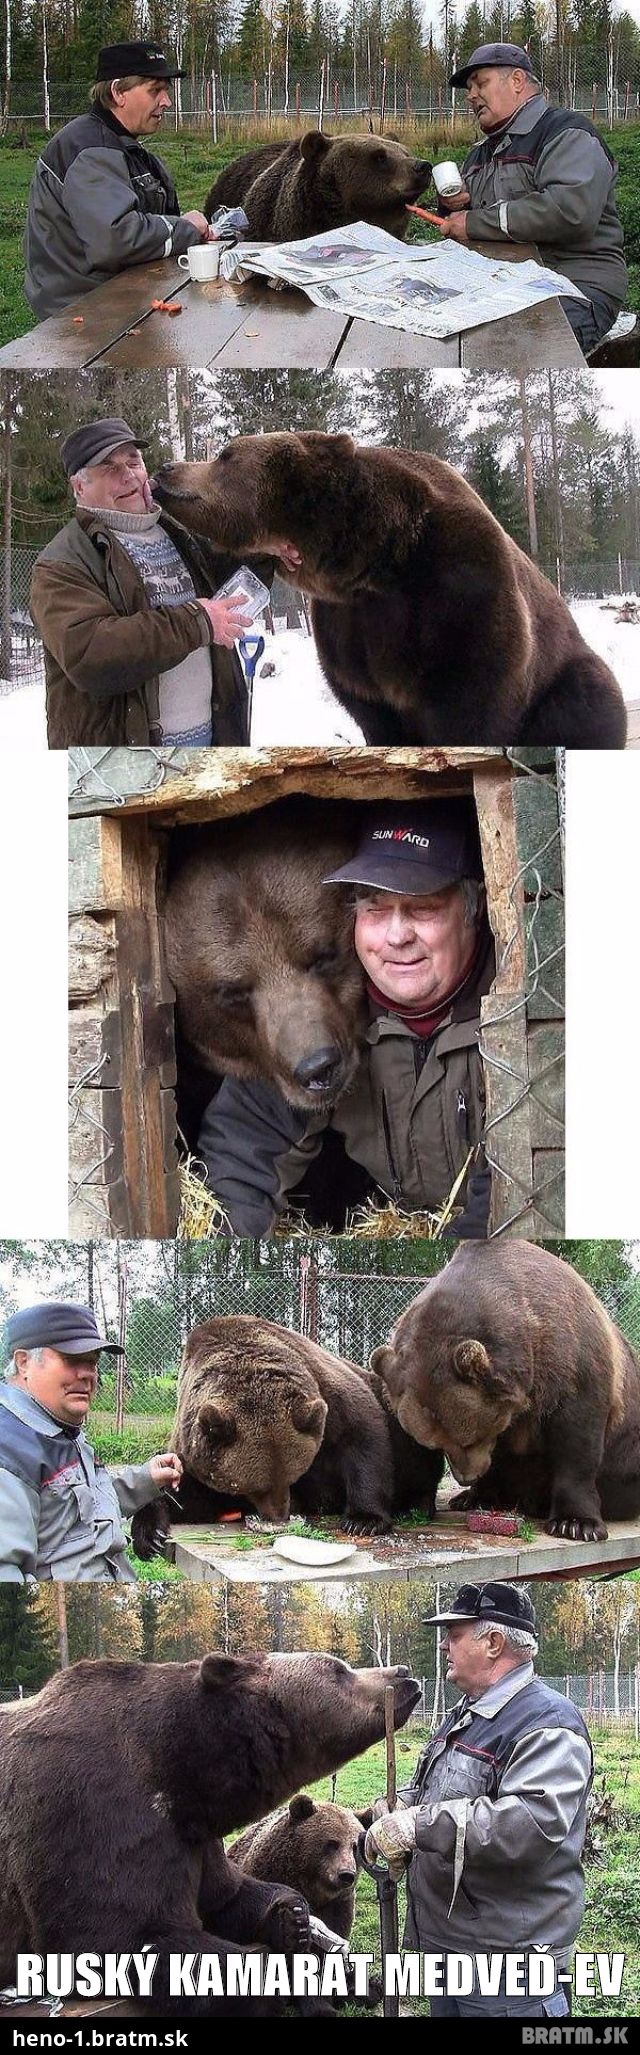 Ruský kamarát Medveď-ev :D :)